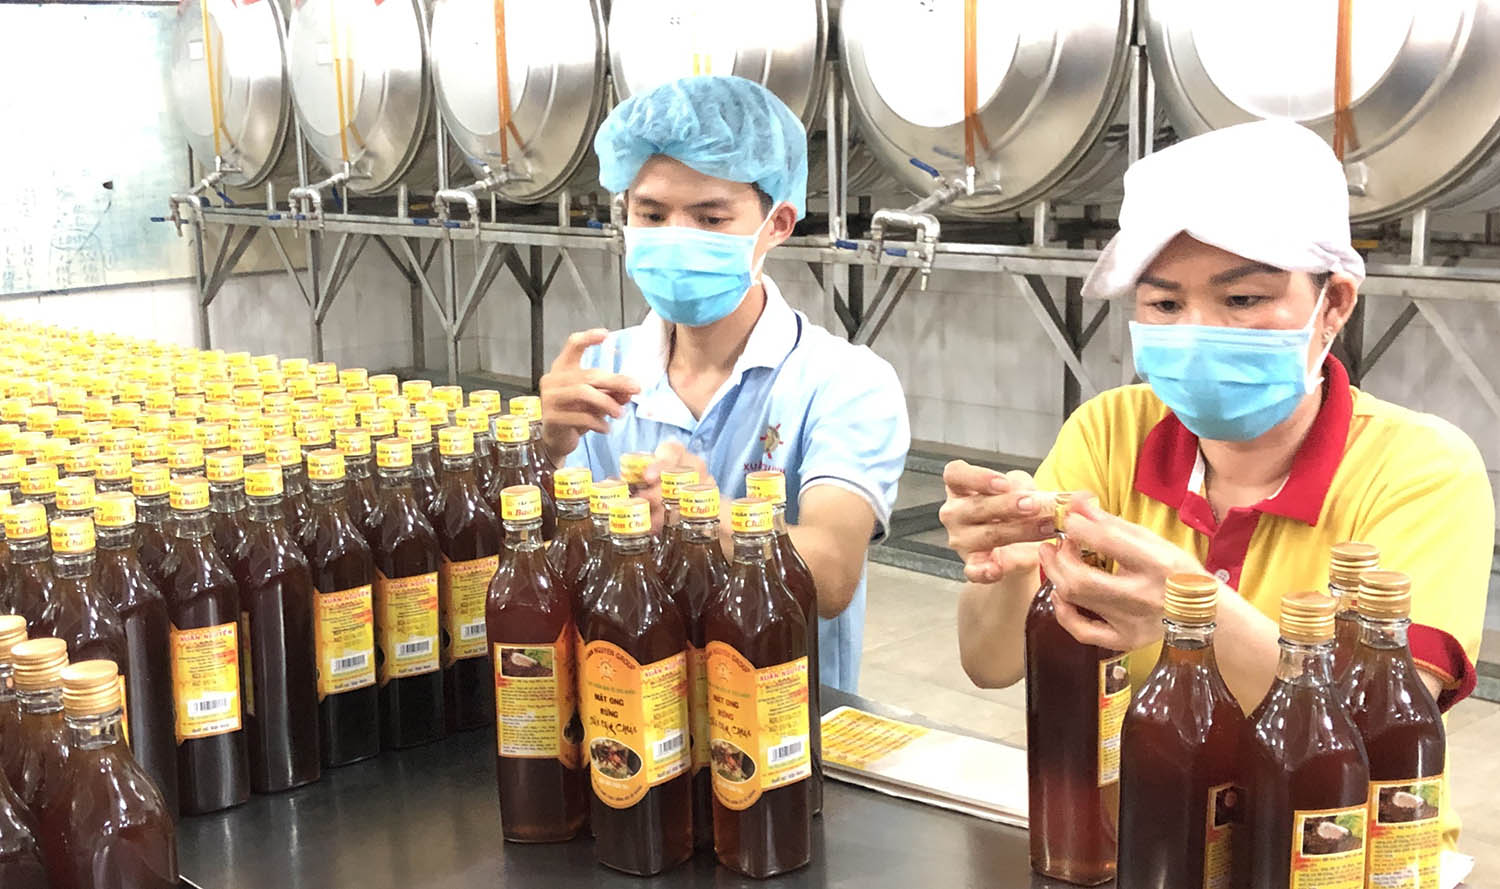 Vietnam Honey, I shrunk the bags! - VnExpress International